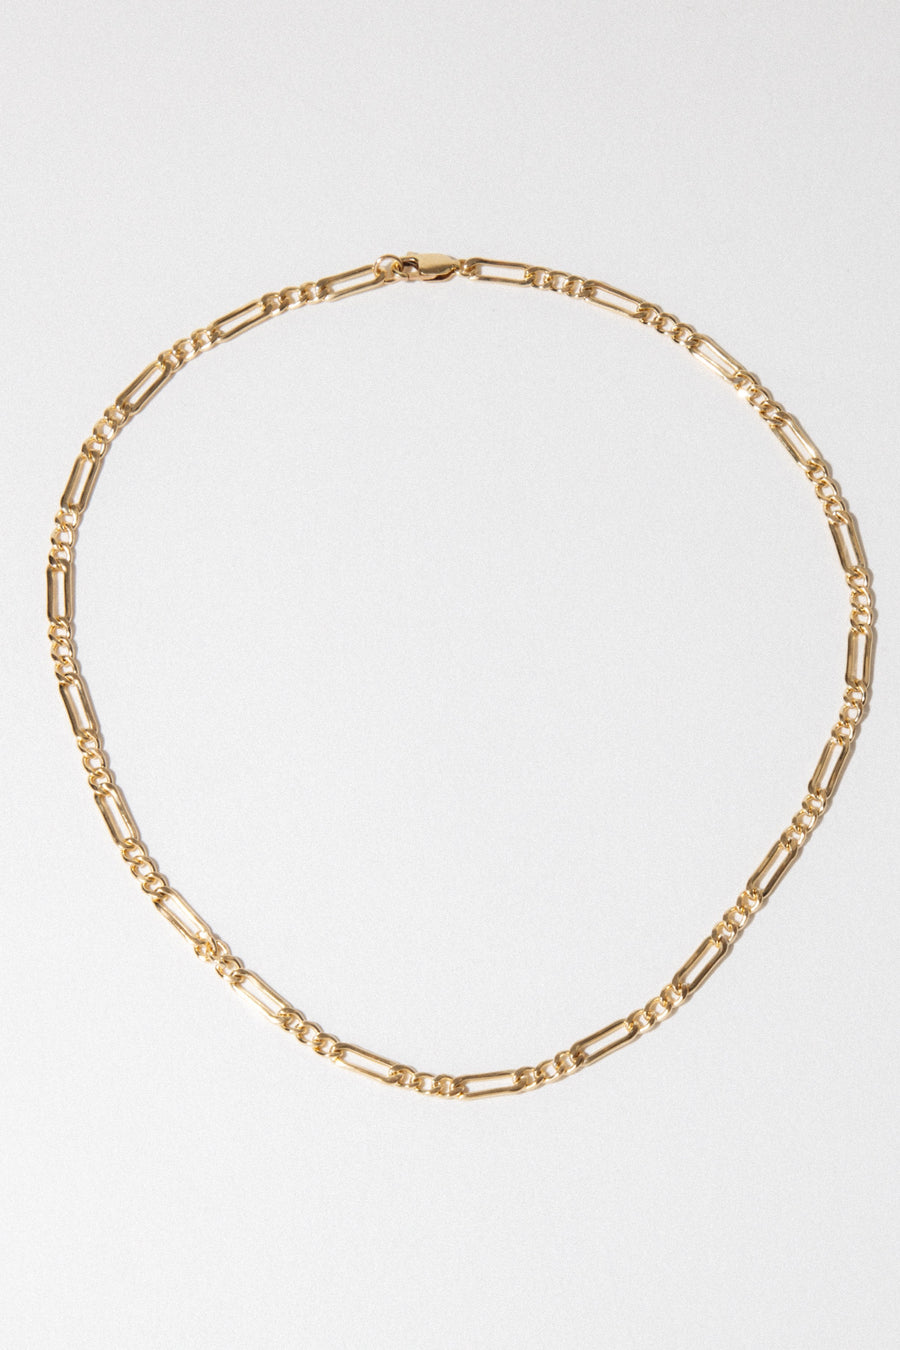 CGM Jewelry Gold / 14 Inches Da Vinci Chain Choker